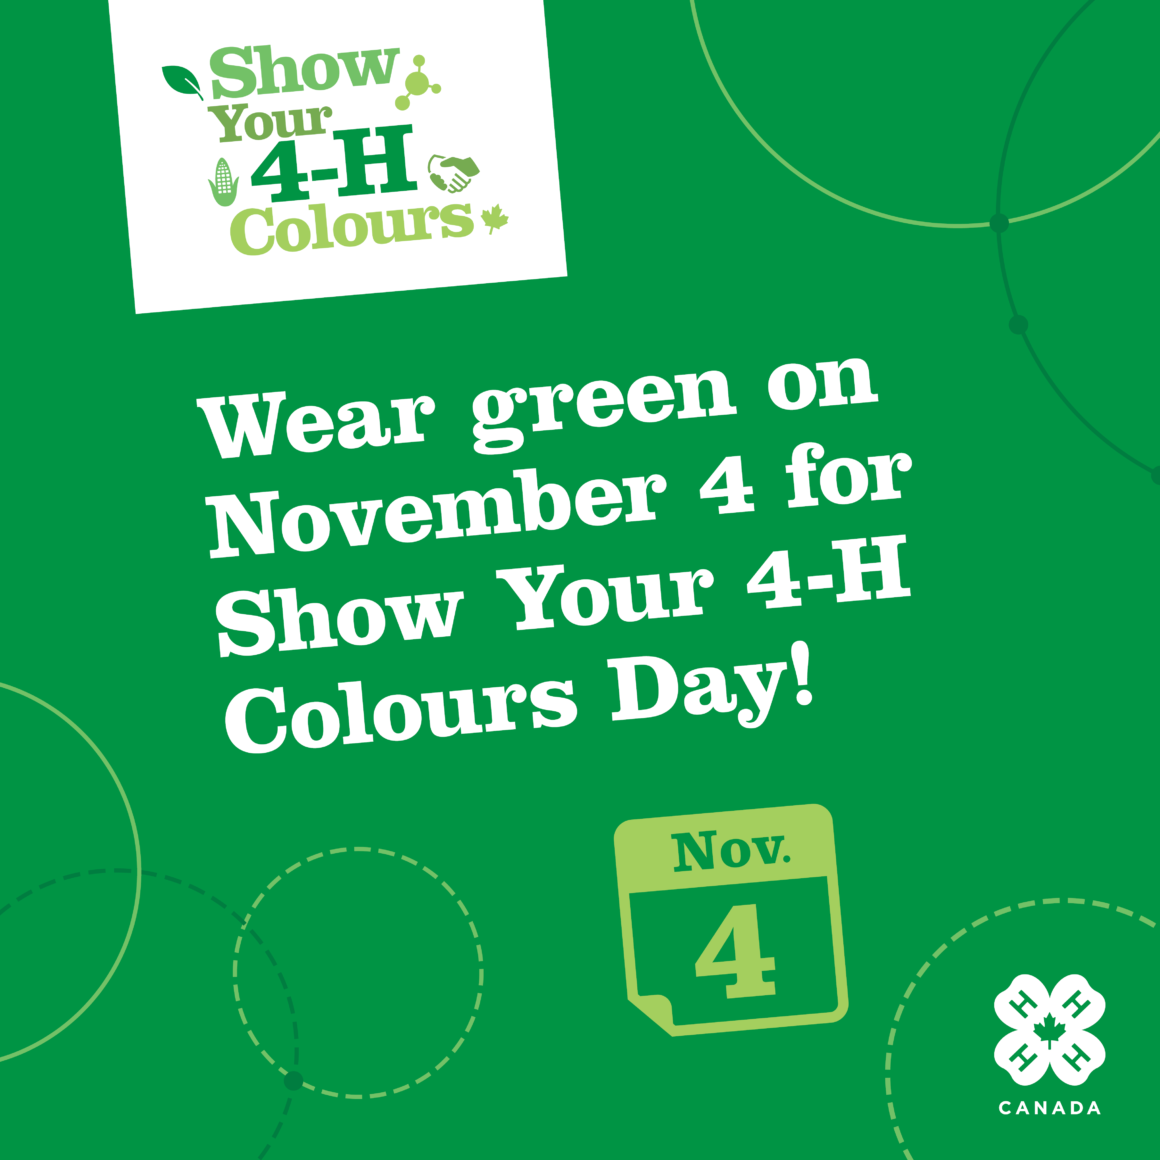 Show Your 4-H Colours!